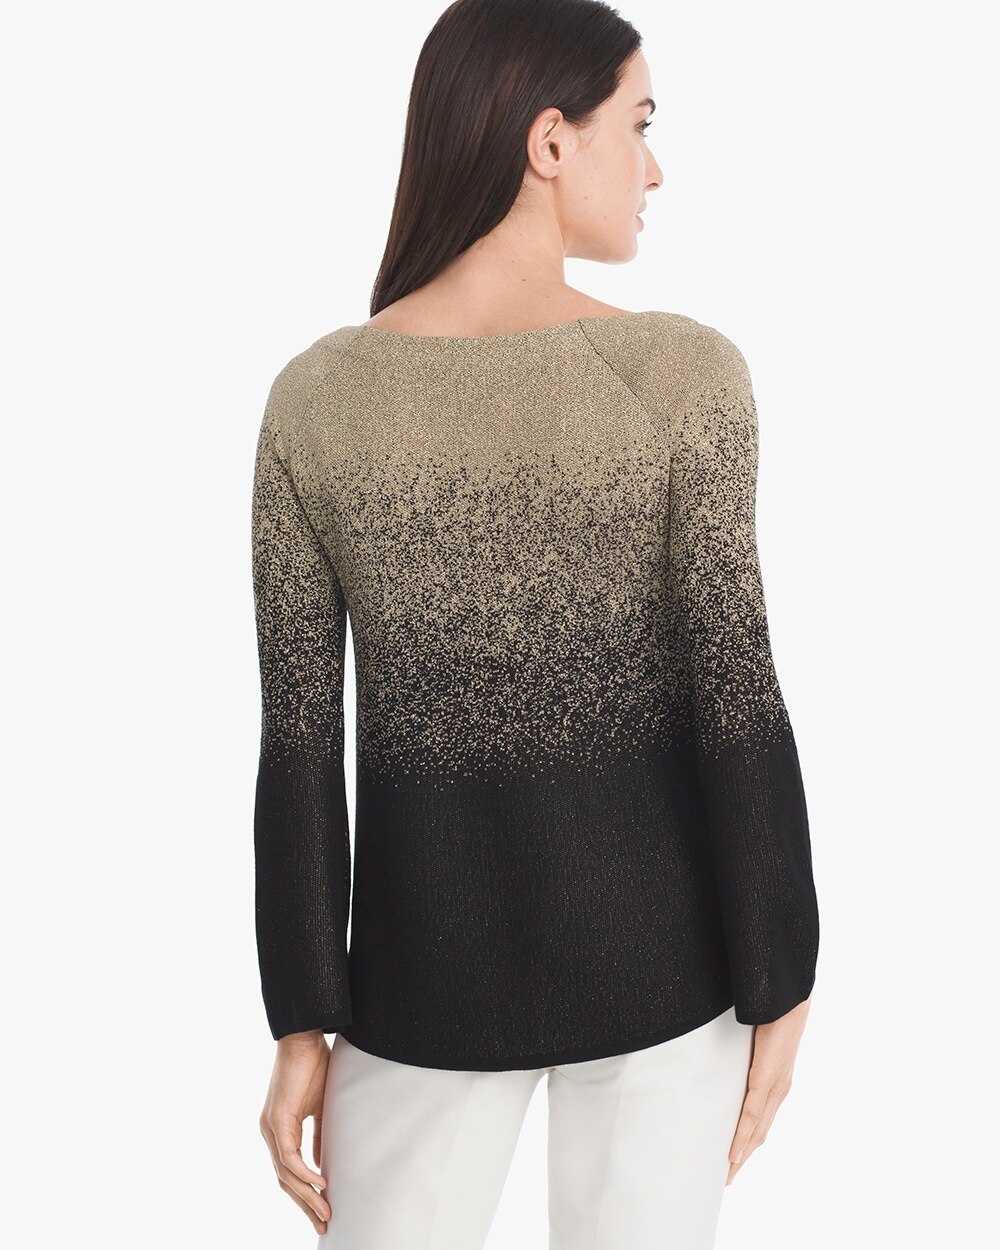 Metallic Ombre Pullover Sweater - White House Black Market